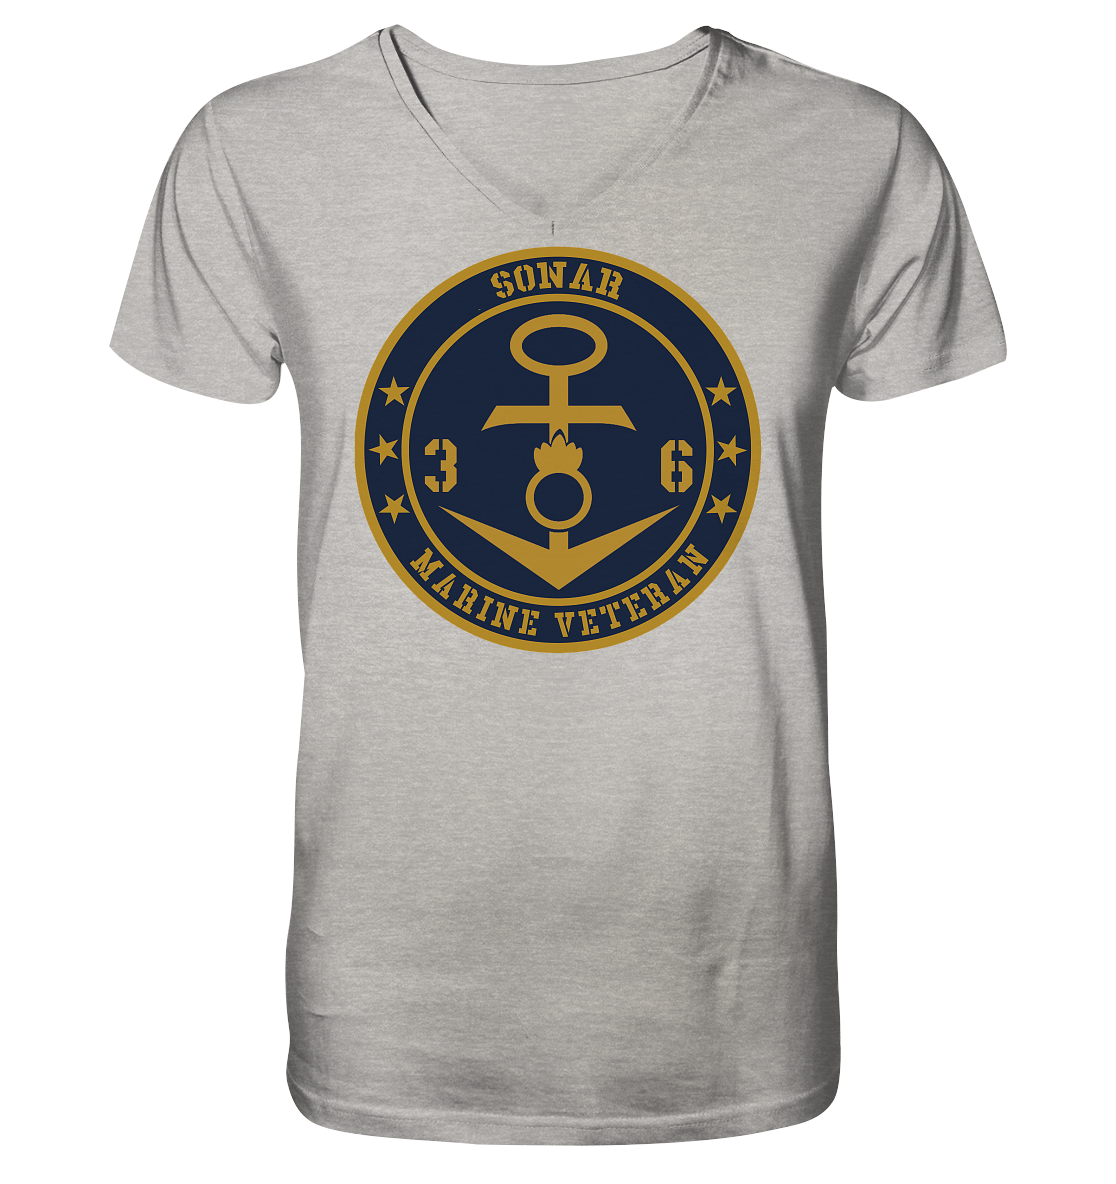 Marine Veteran 36er SONAR - Mens Organic V-Neck Shirt